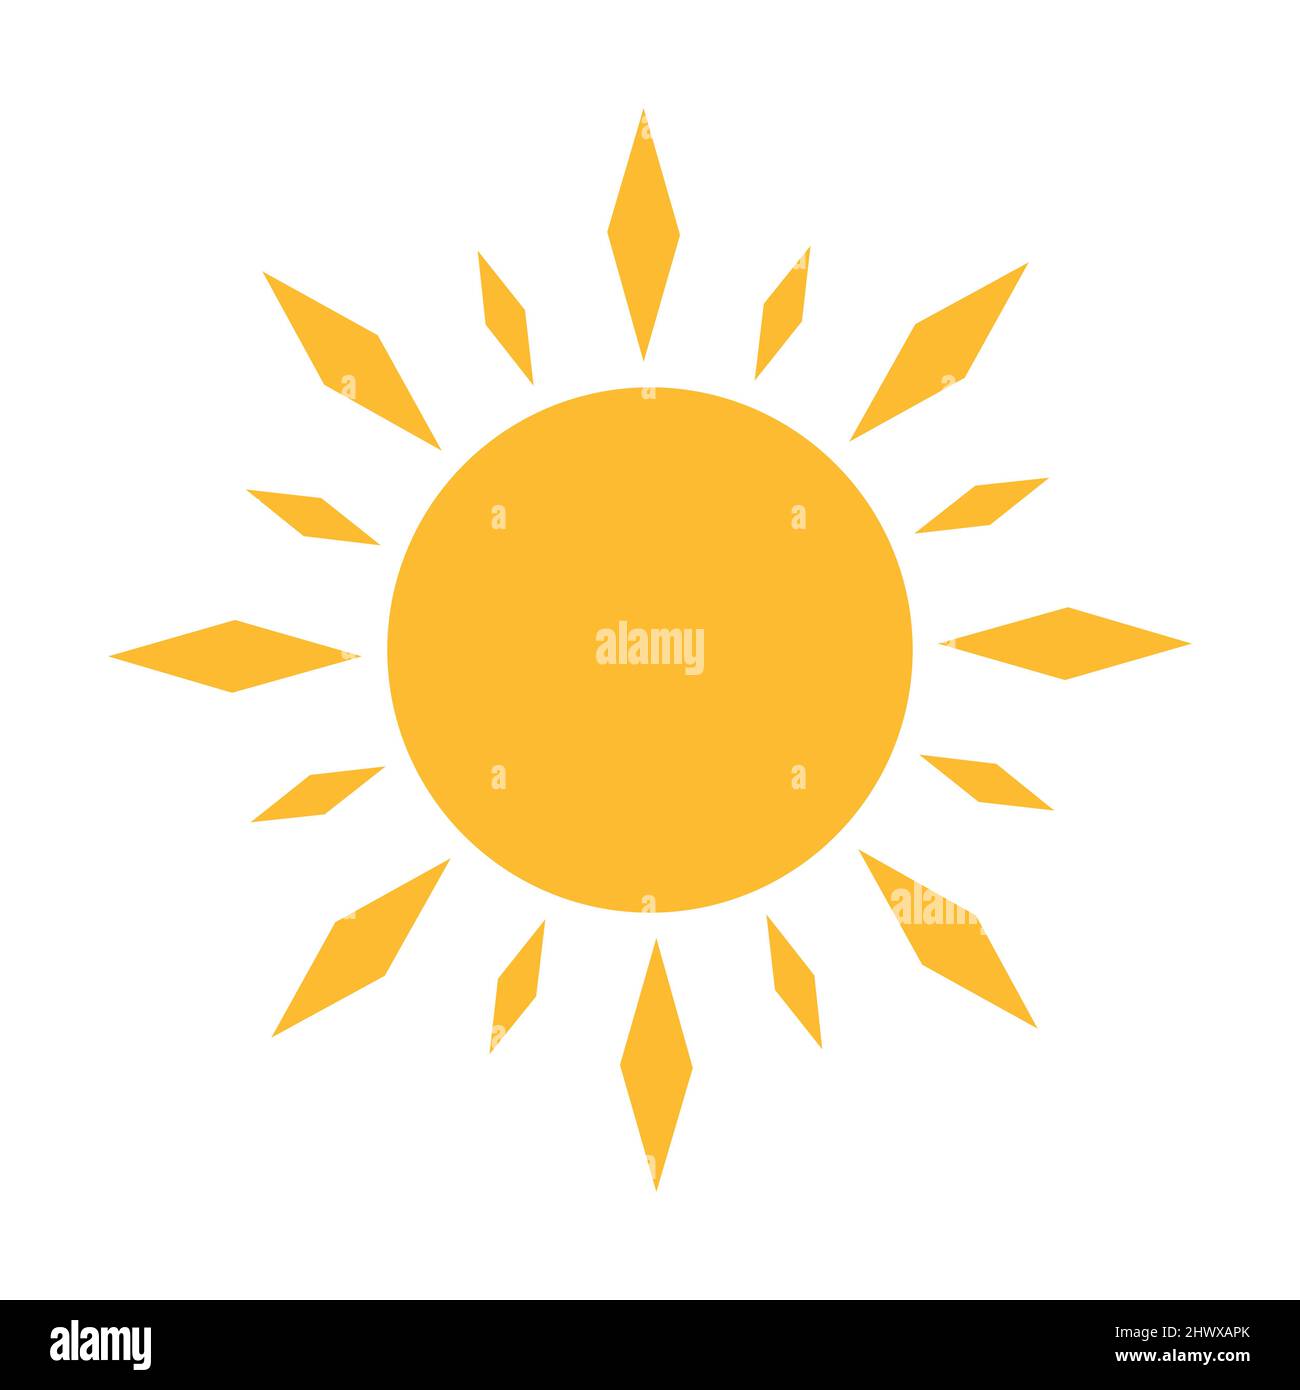 Eine halbe Sonne geht nach unten Symbolvektor Sonnenuntergang Konzept für Grafik-Design, Logo, Website, Social Media, mobile App, UI-Abbildung Stock Vektor